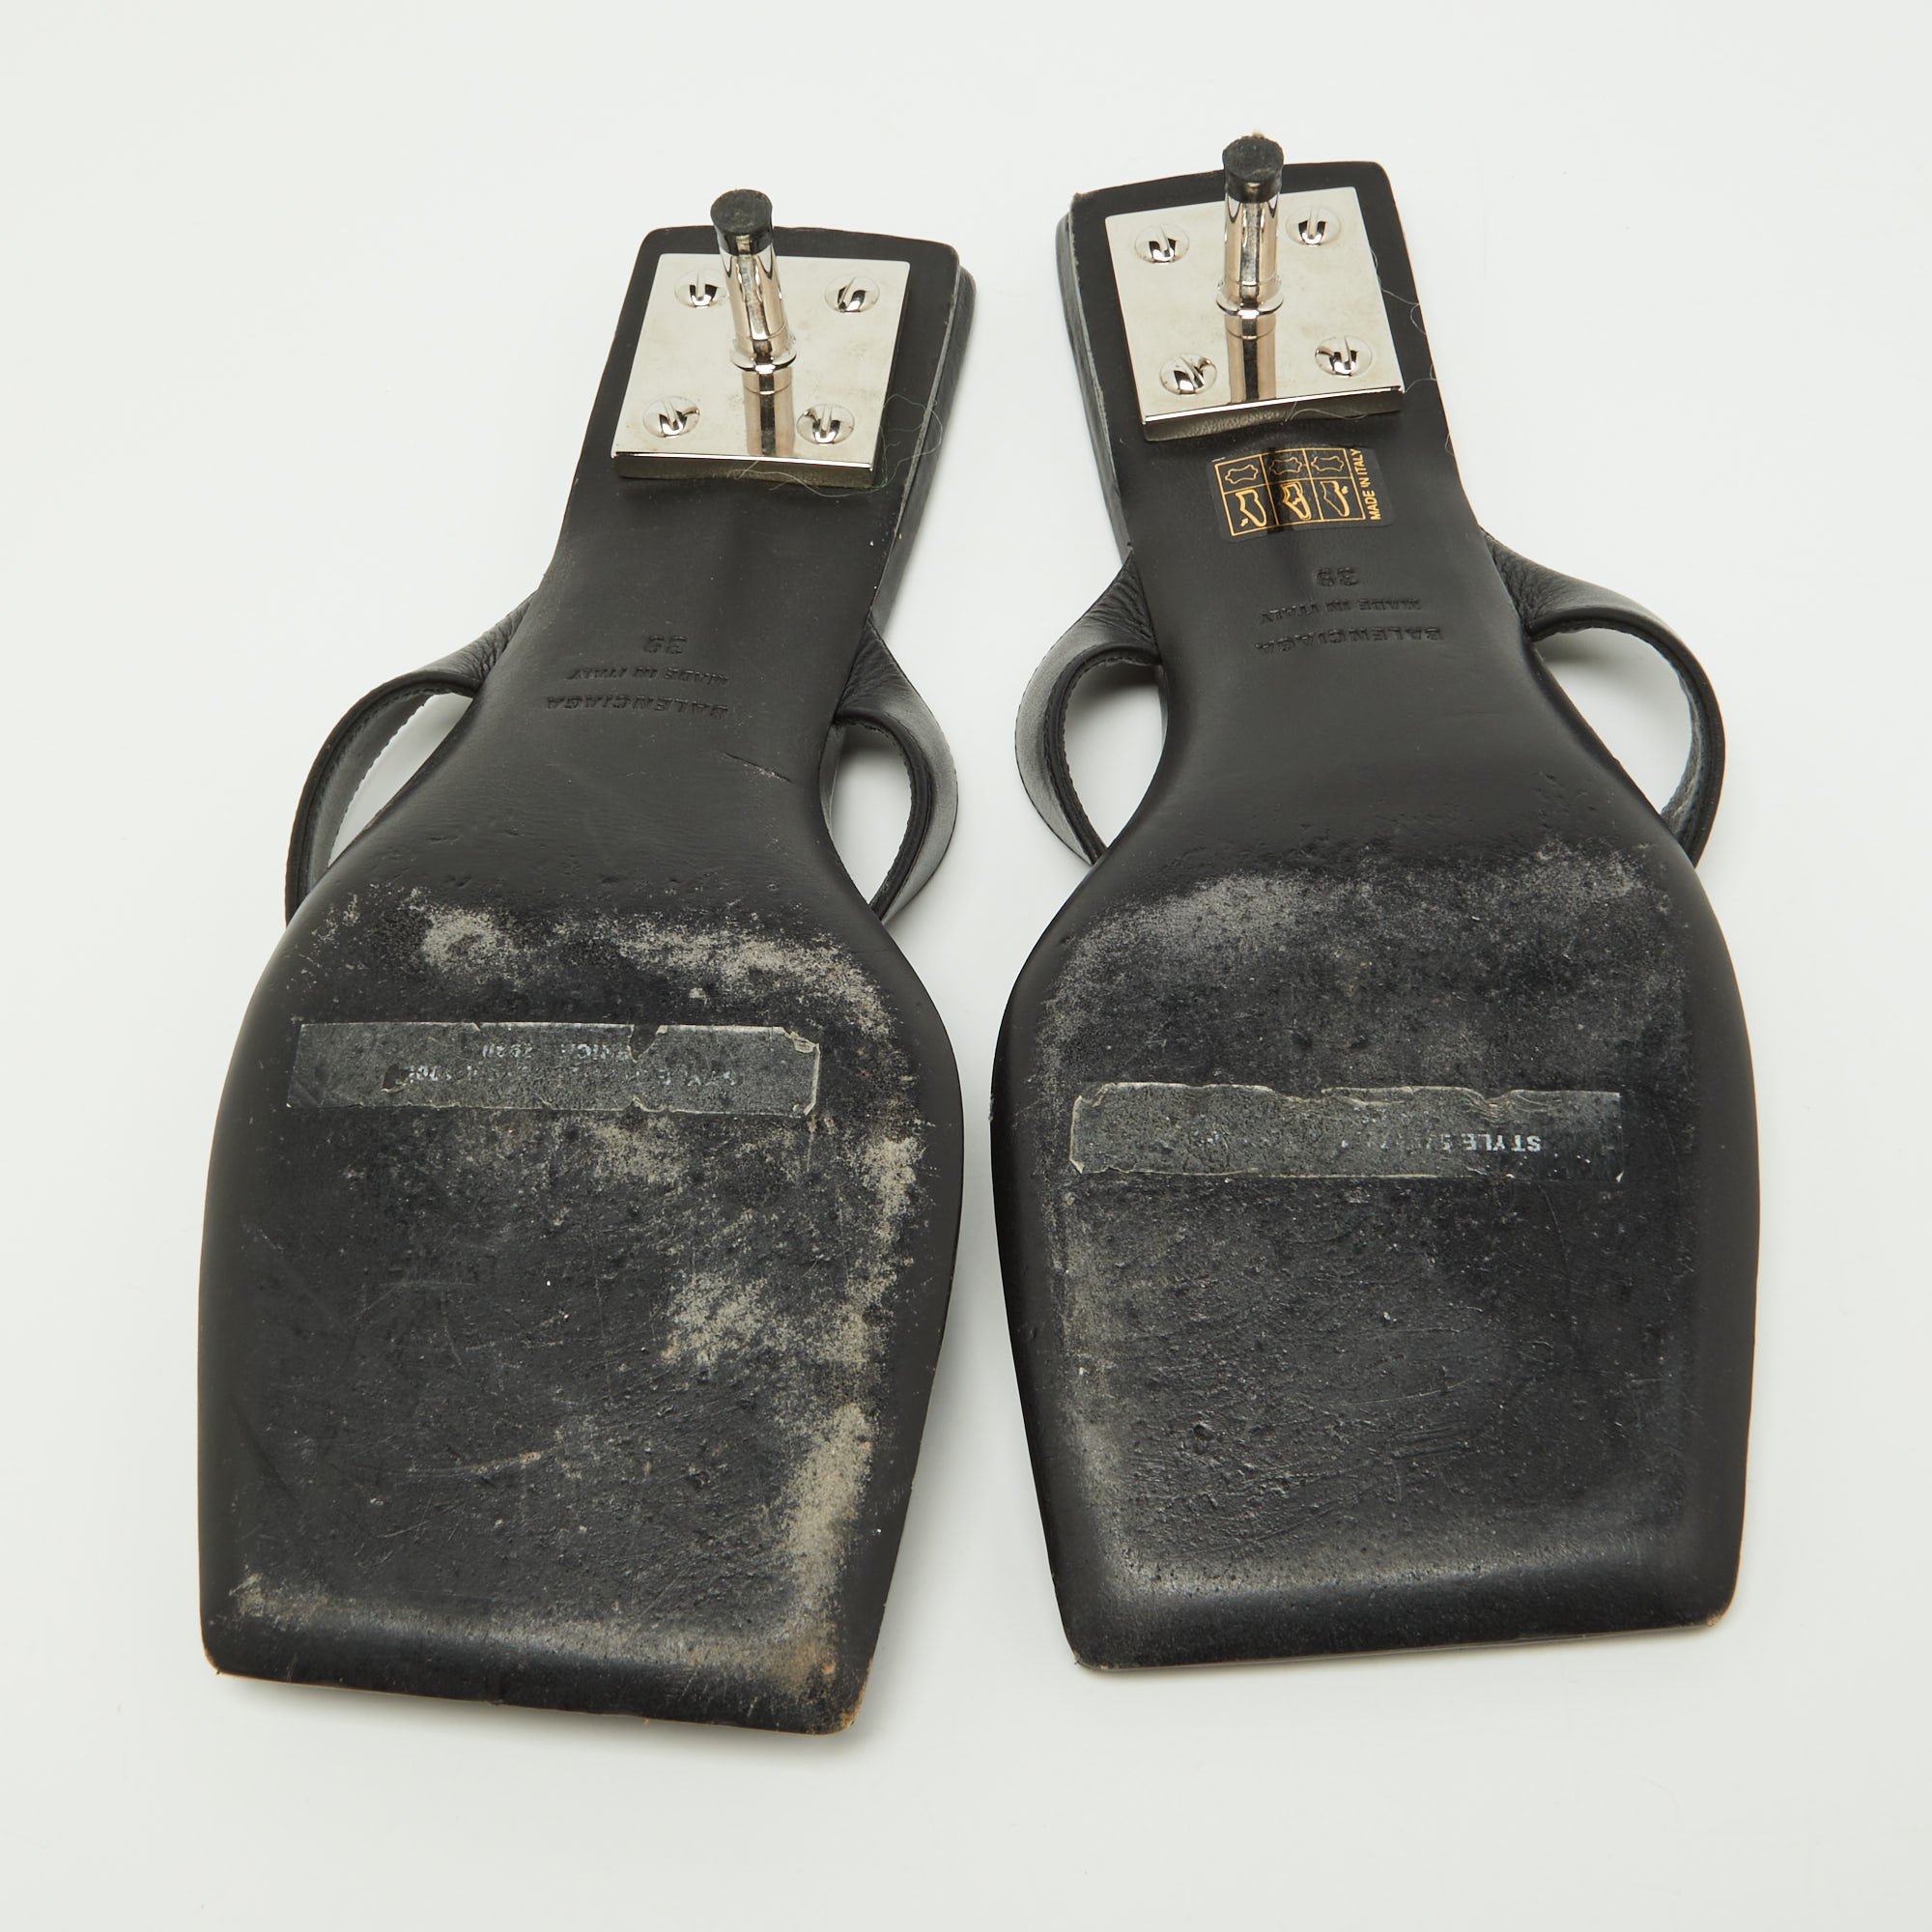 Balenciaga Black Leather Thong Slide Sandals Size 39